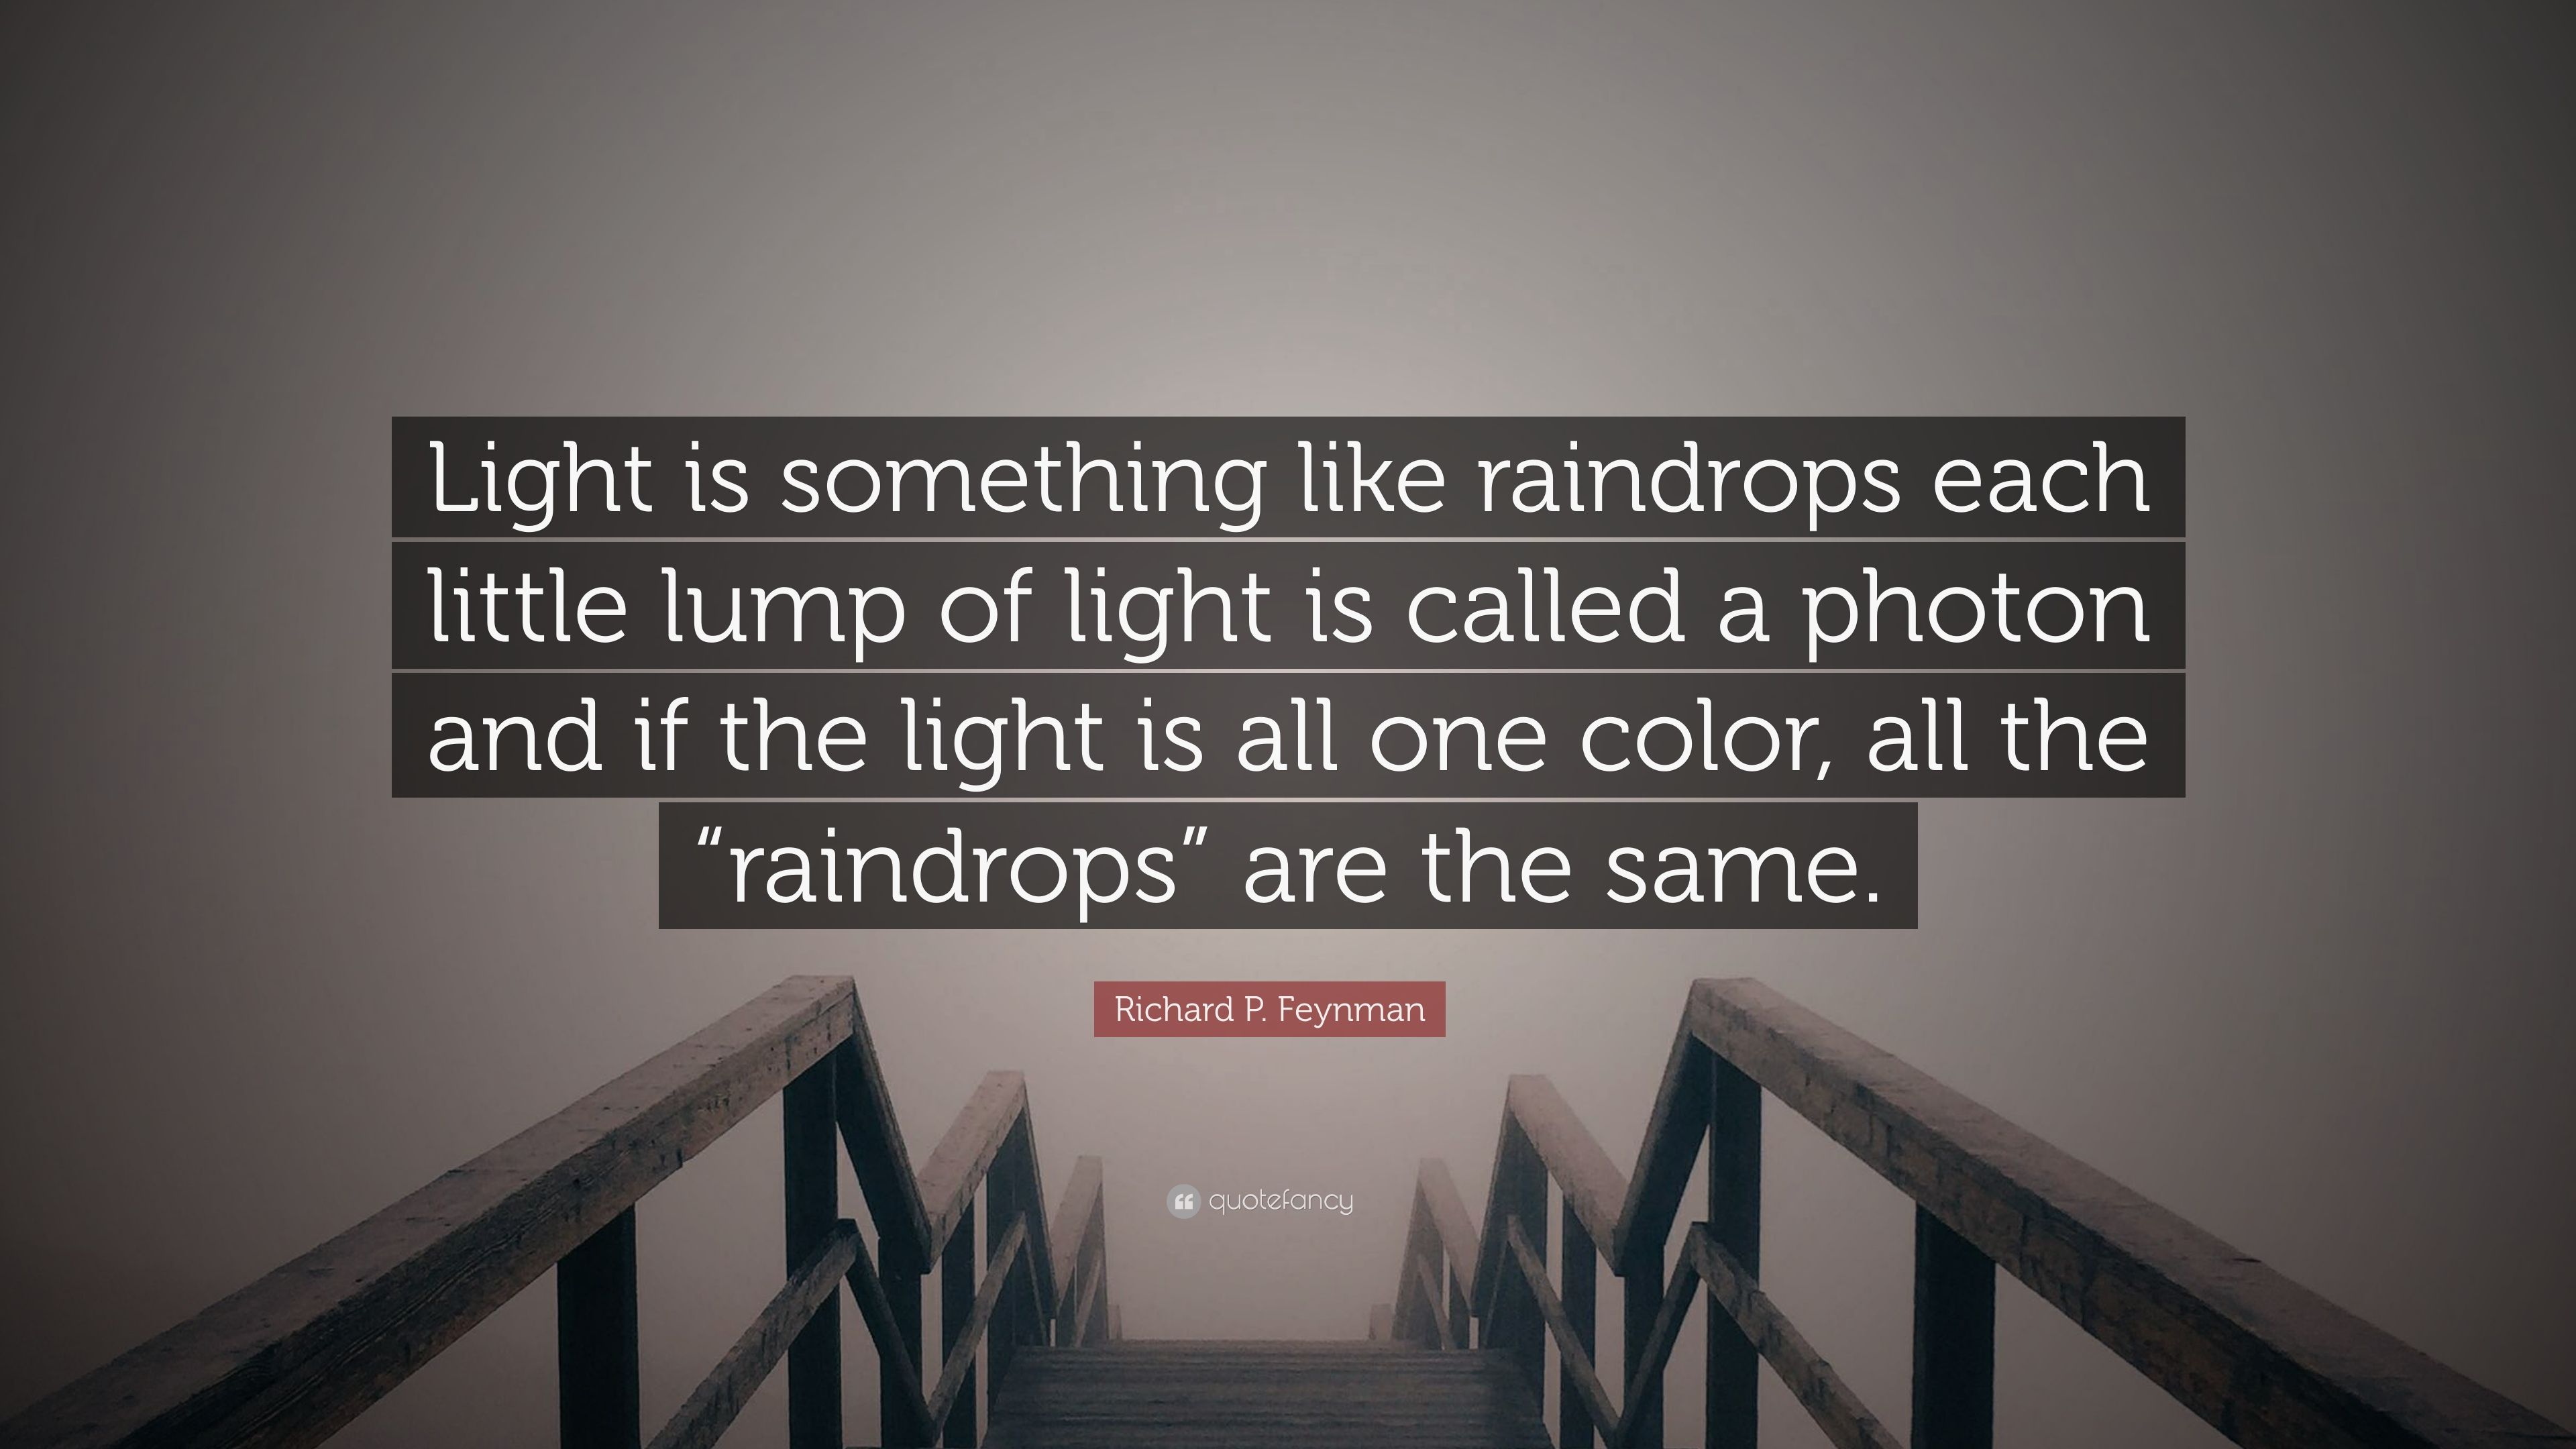 Richard P. Feynman Quote: “Light is something like raindrops each